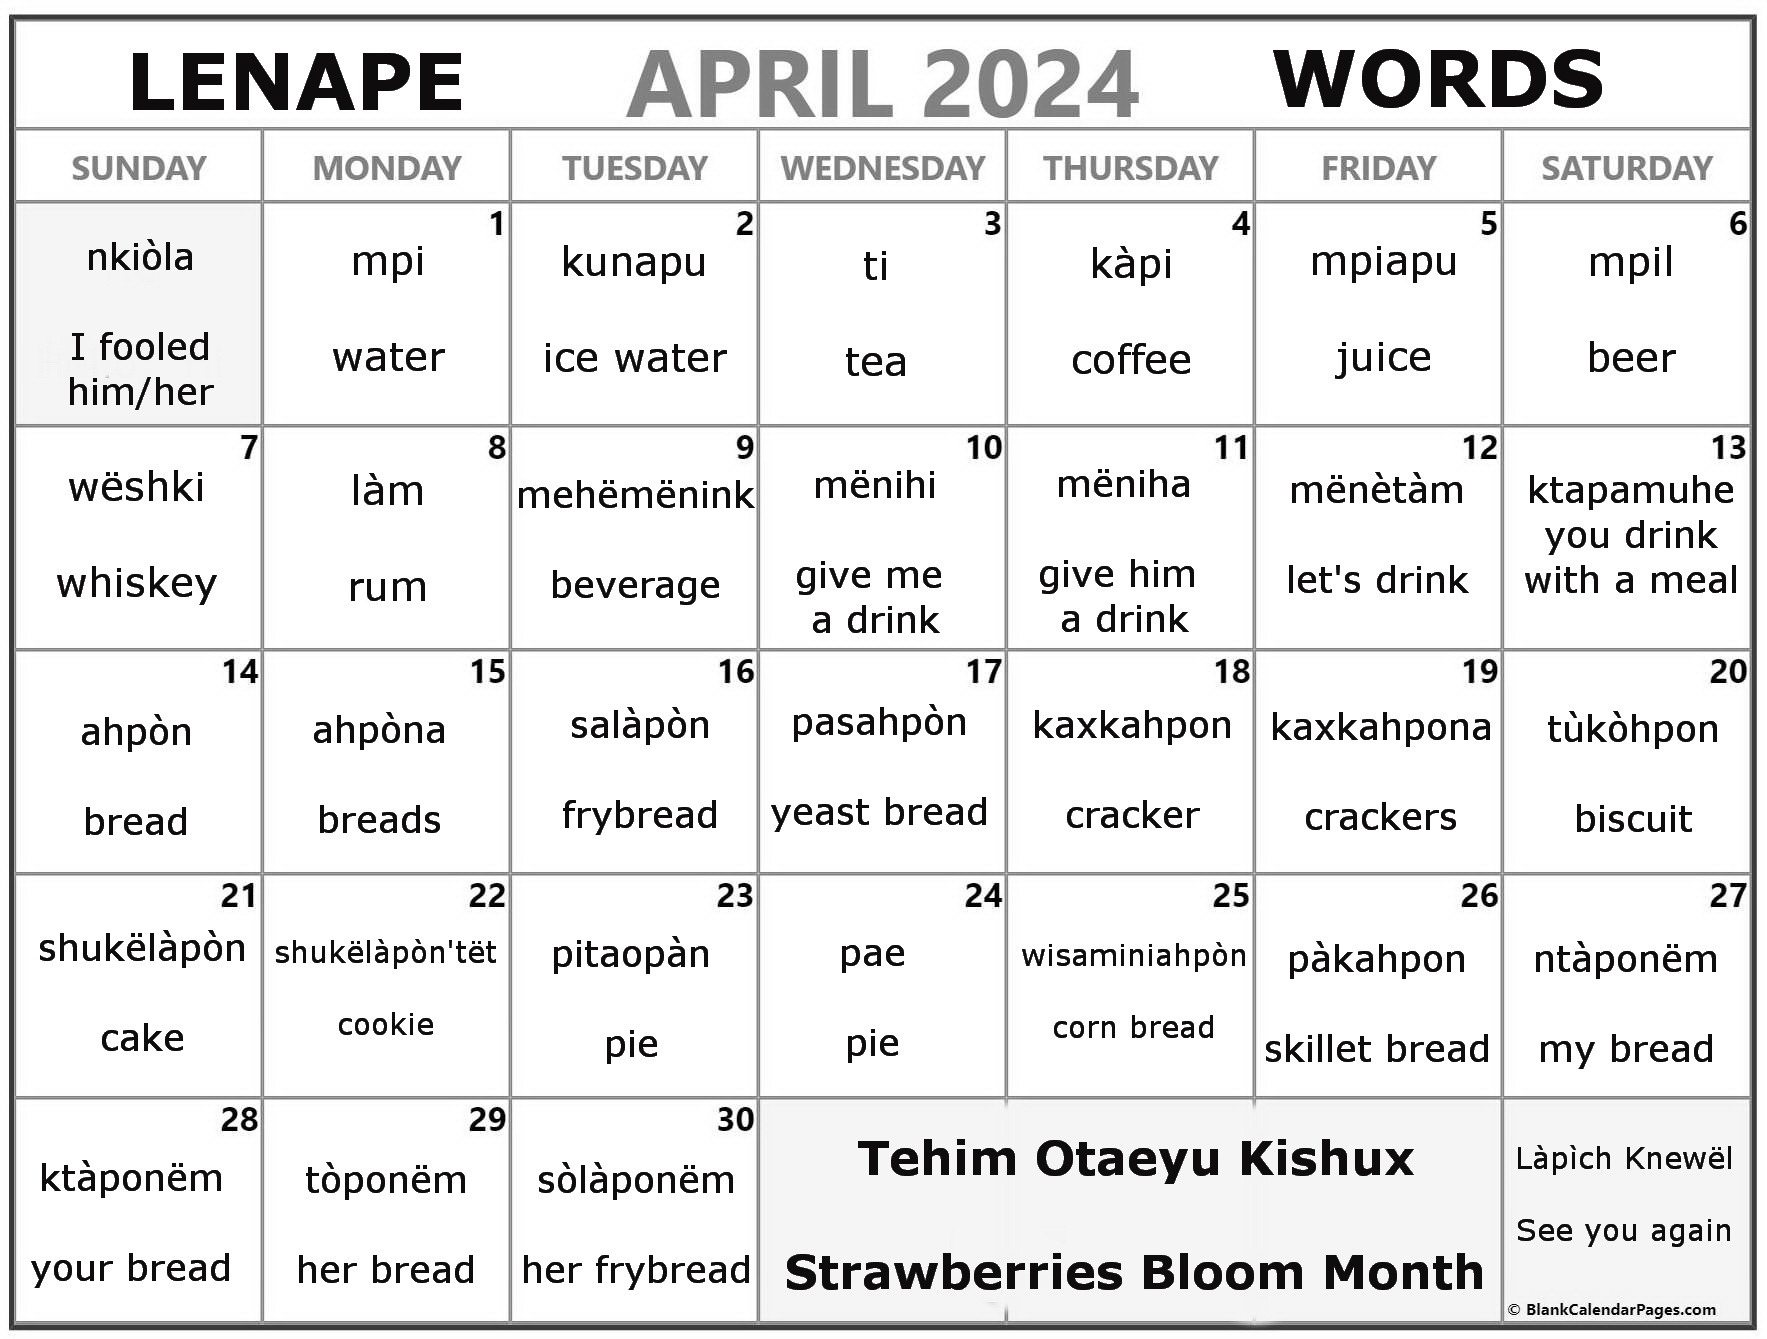 April 2024 Lenape Word-a-Day Calendar